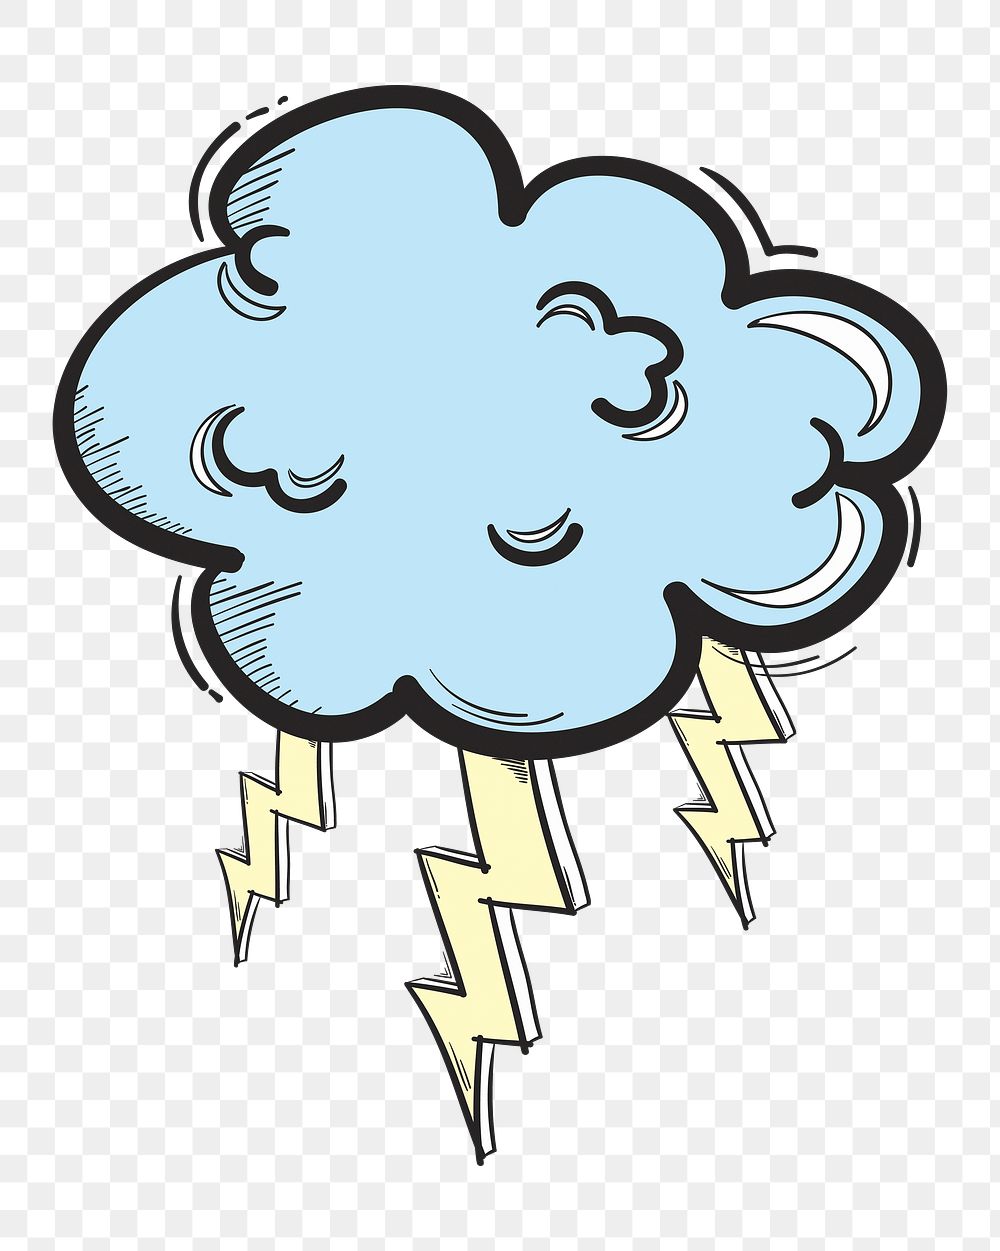 Png thunder cloud cartoon doodle hand drawn sticker